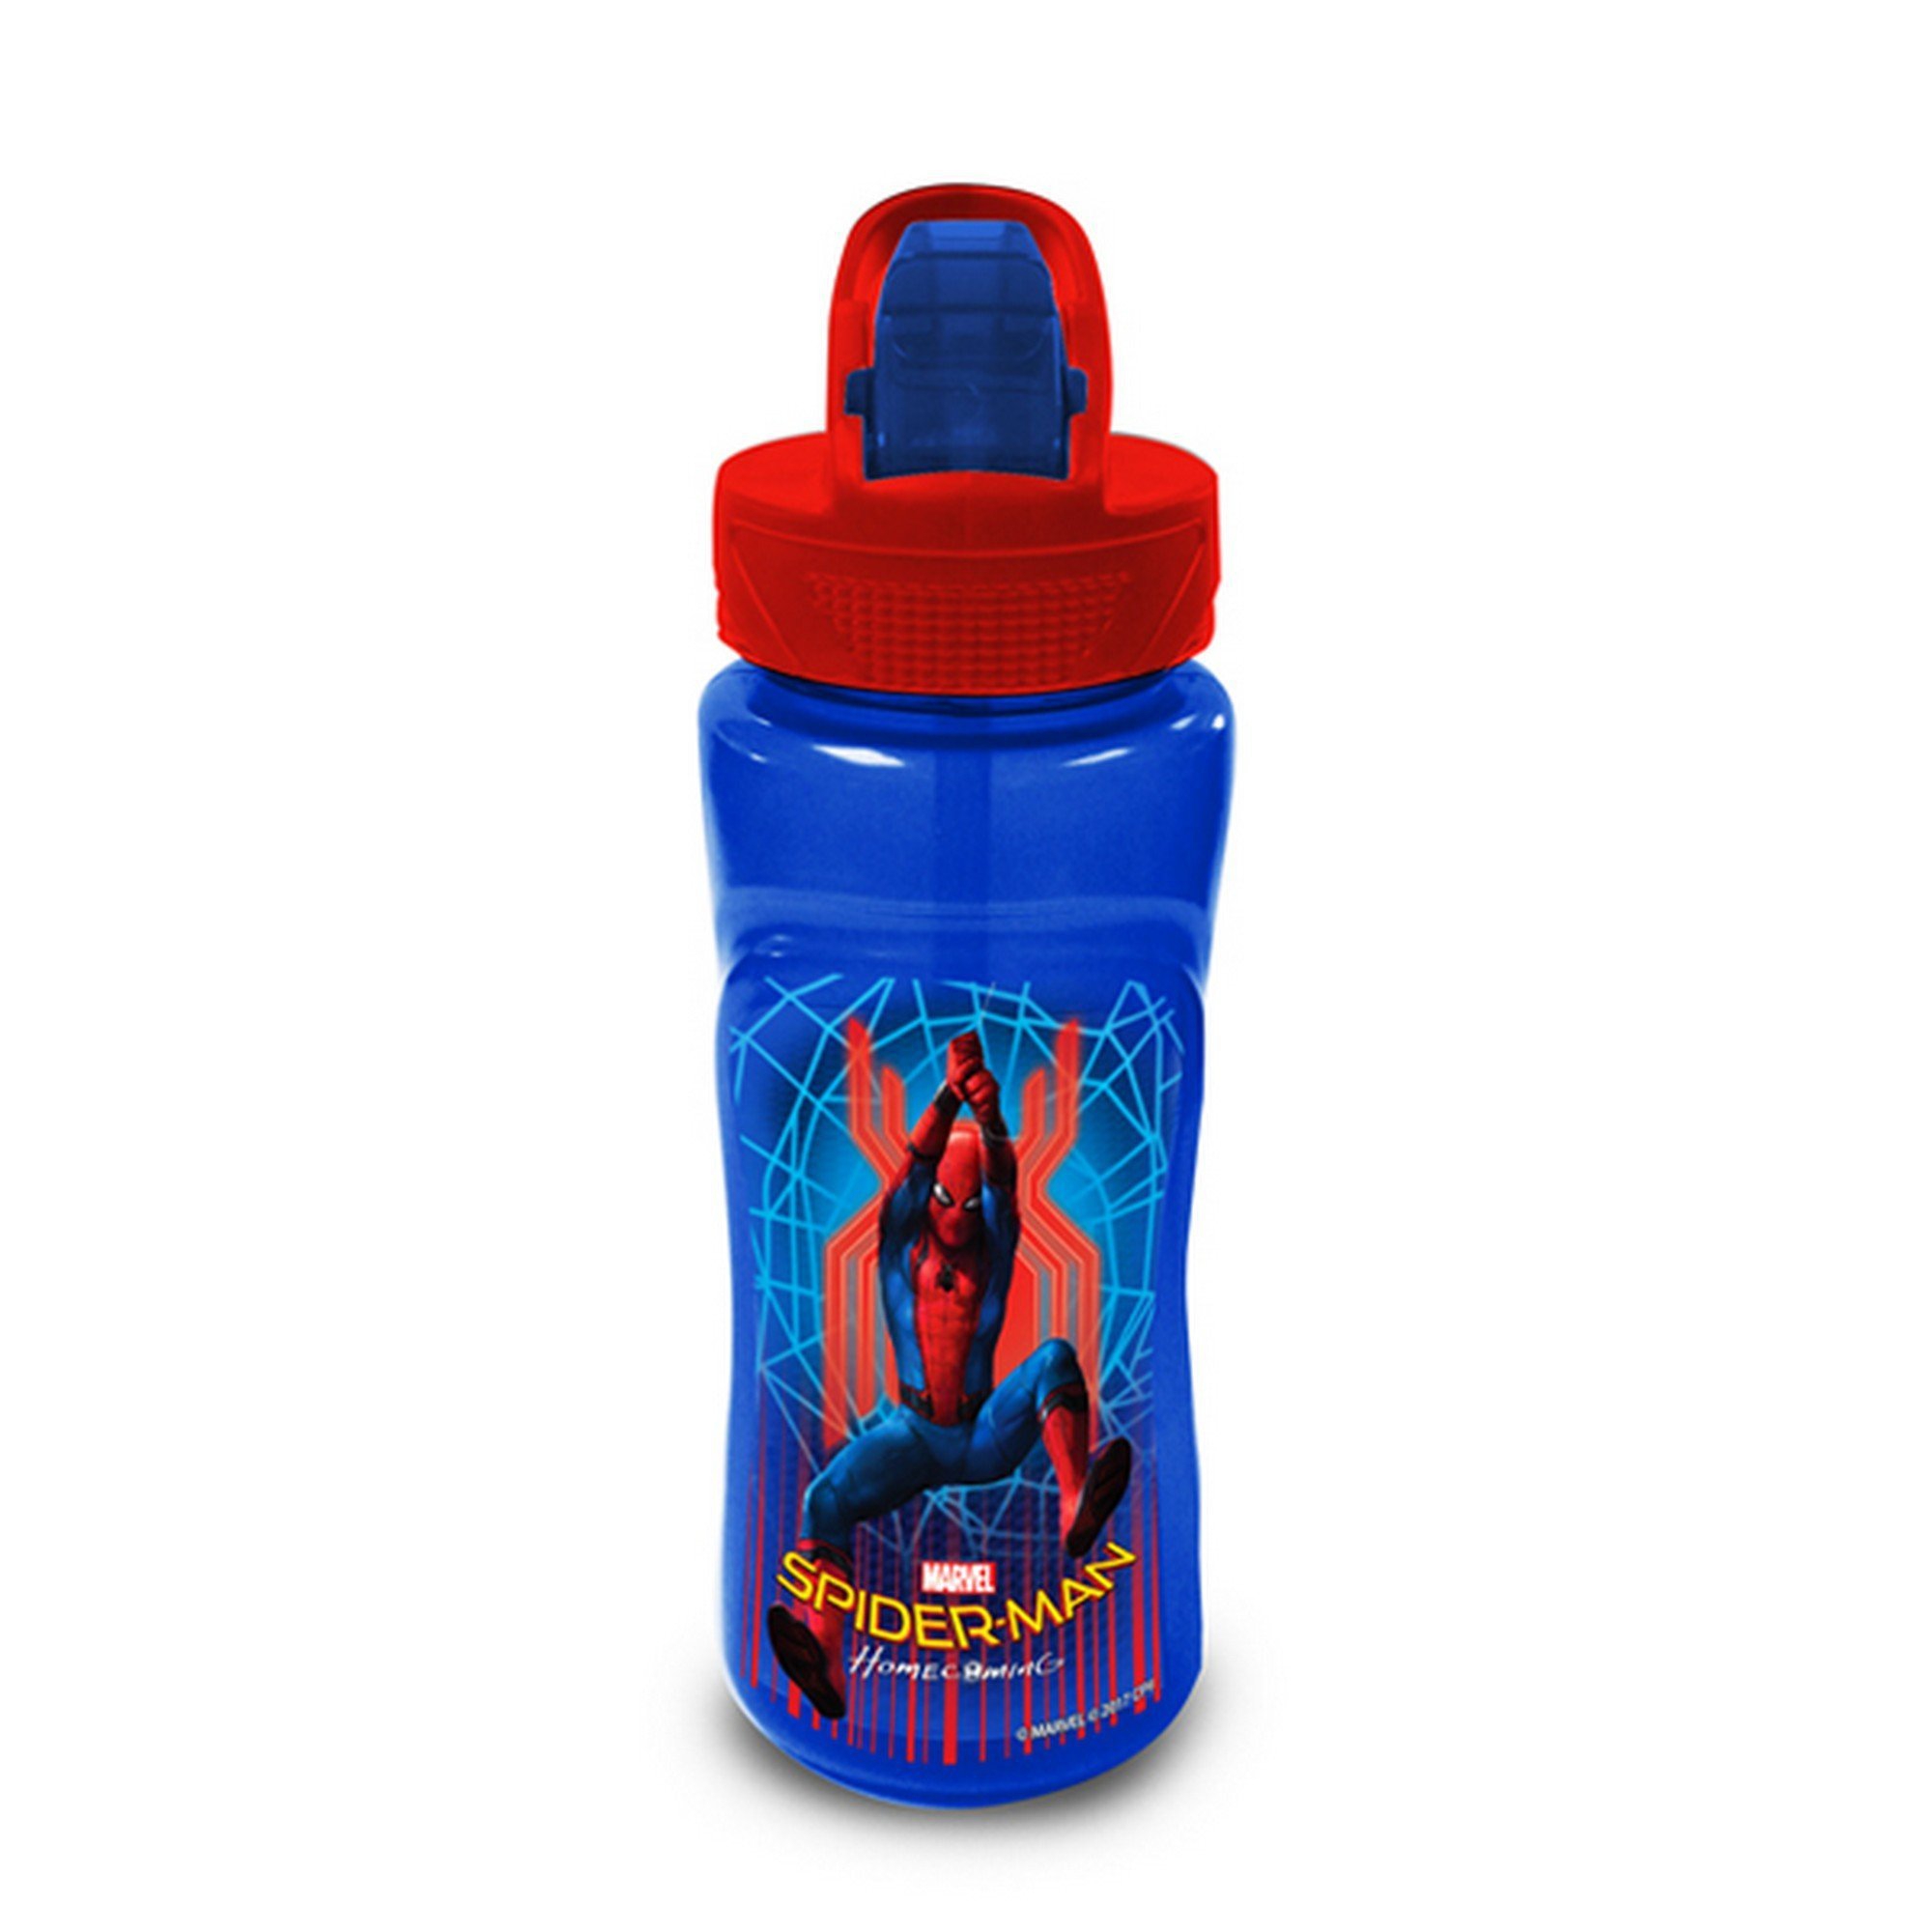 Spiderman 'Homecoming' Aruba Bottle